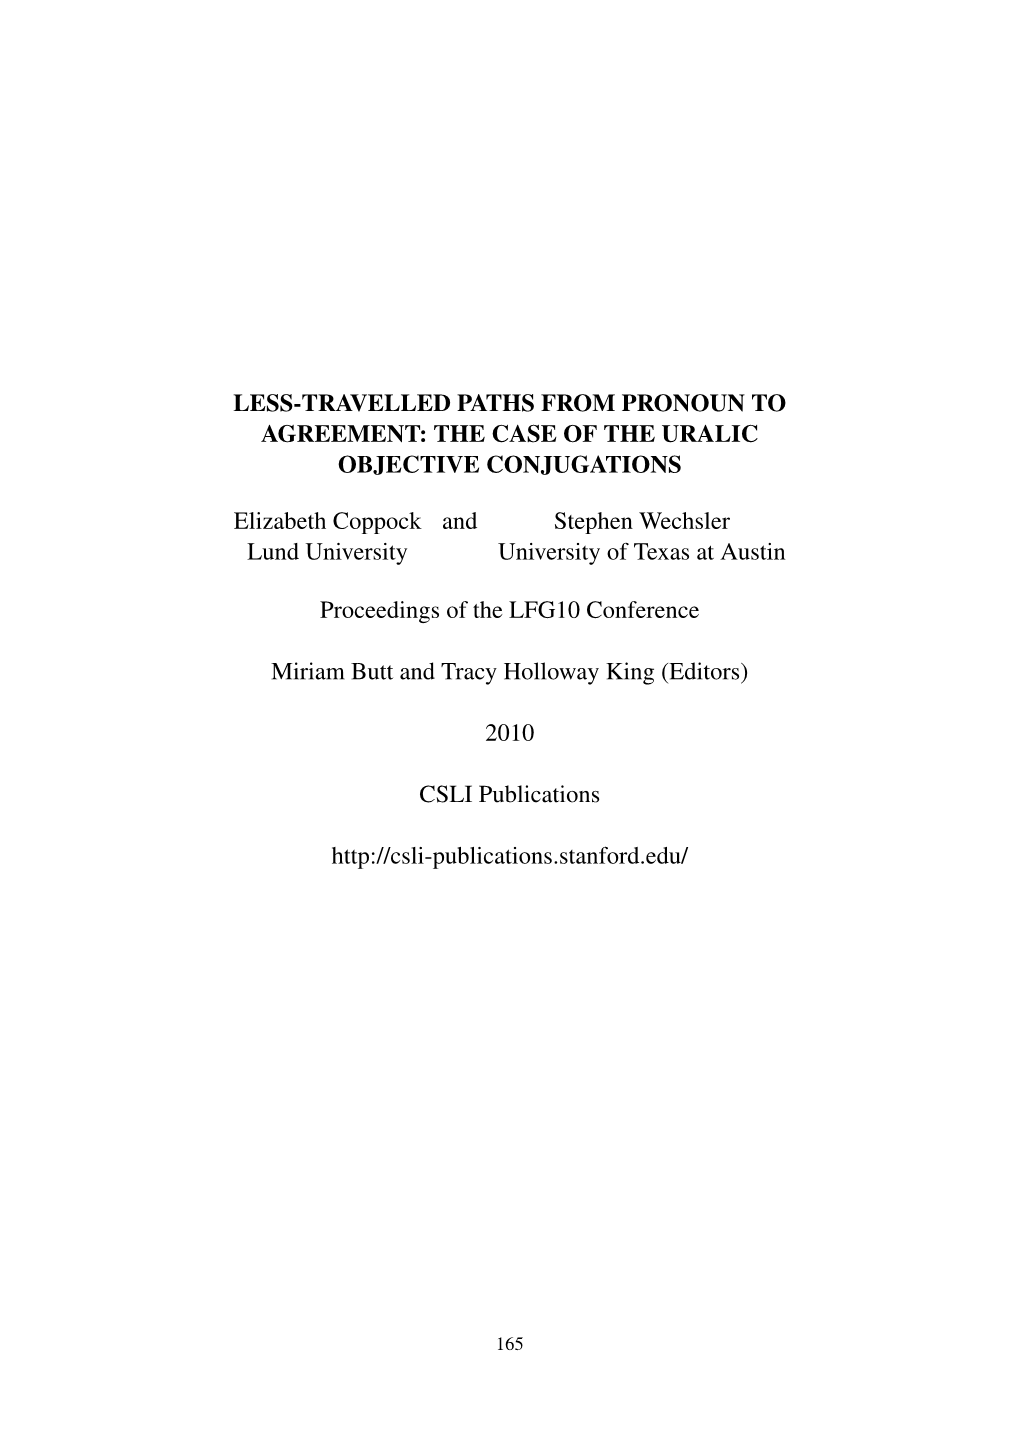 Proceedings of LFG10